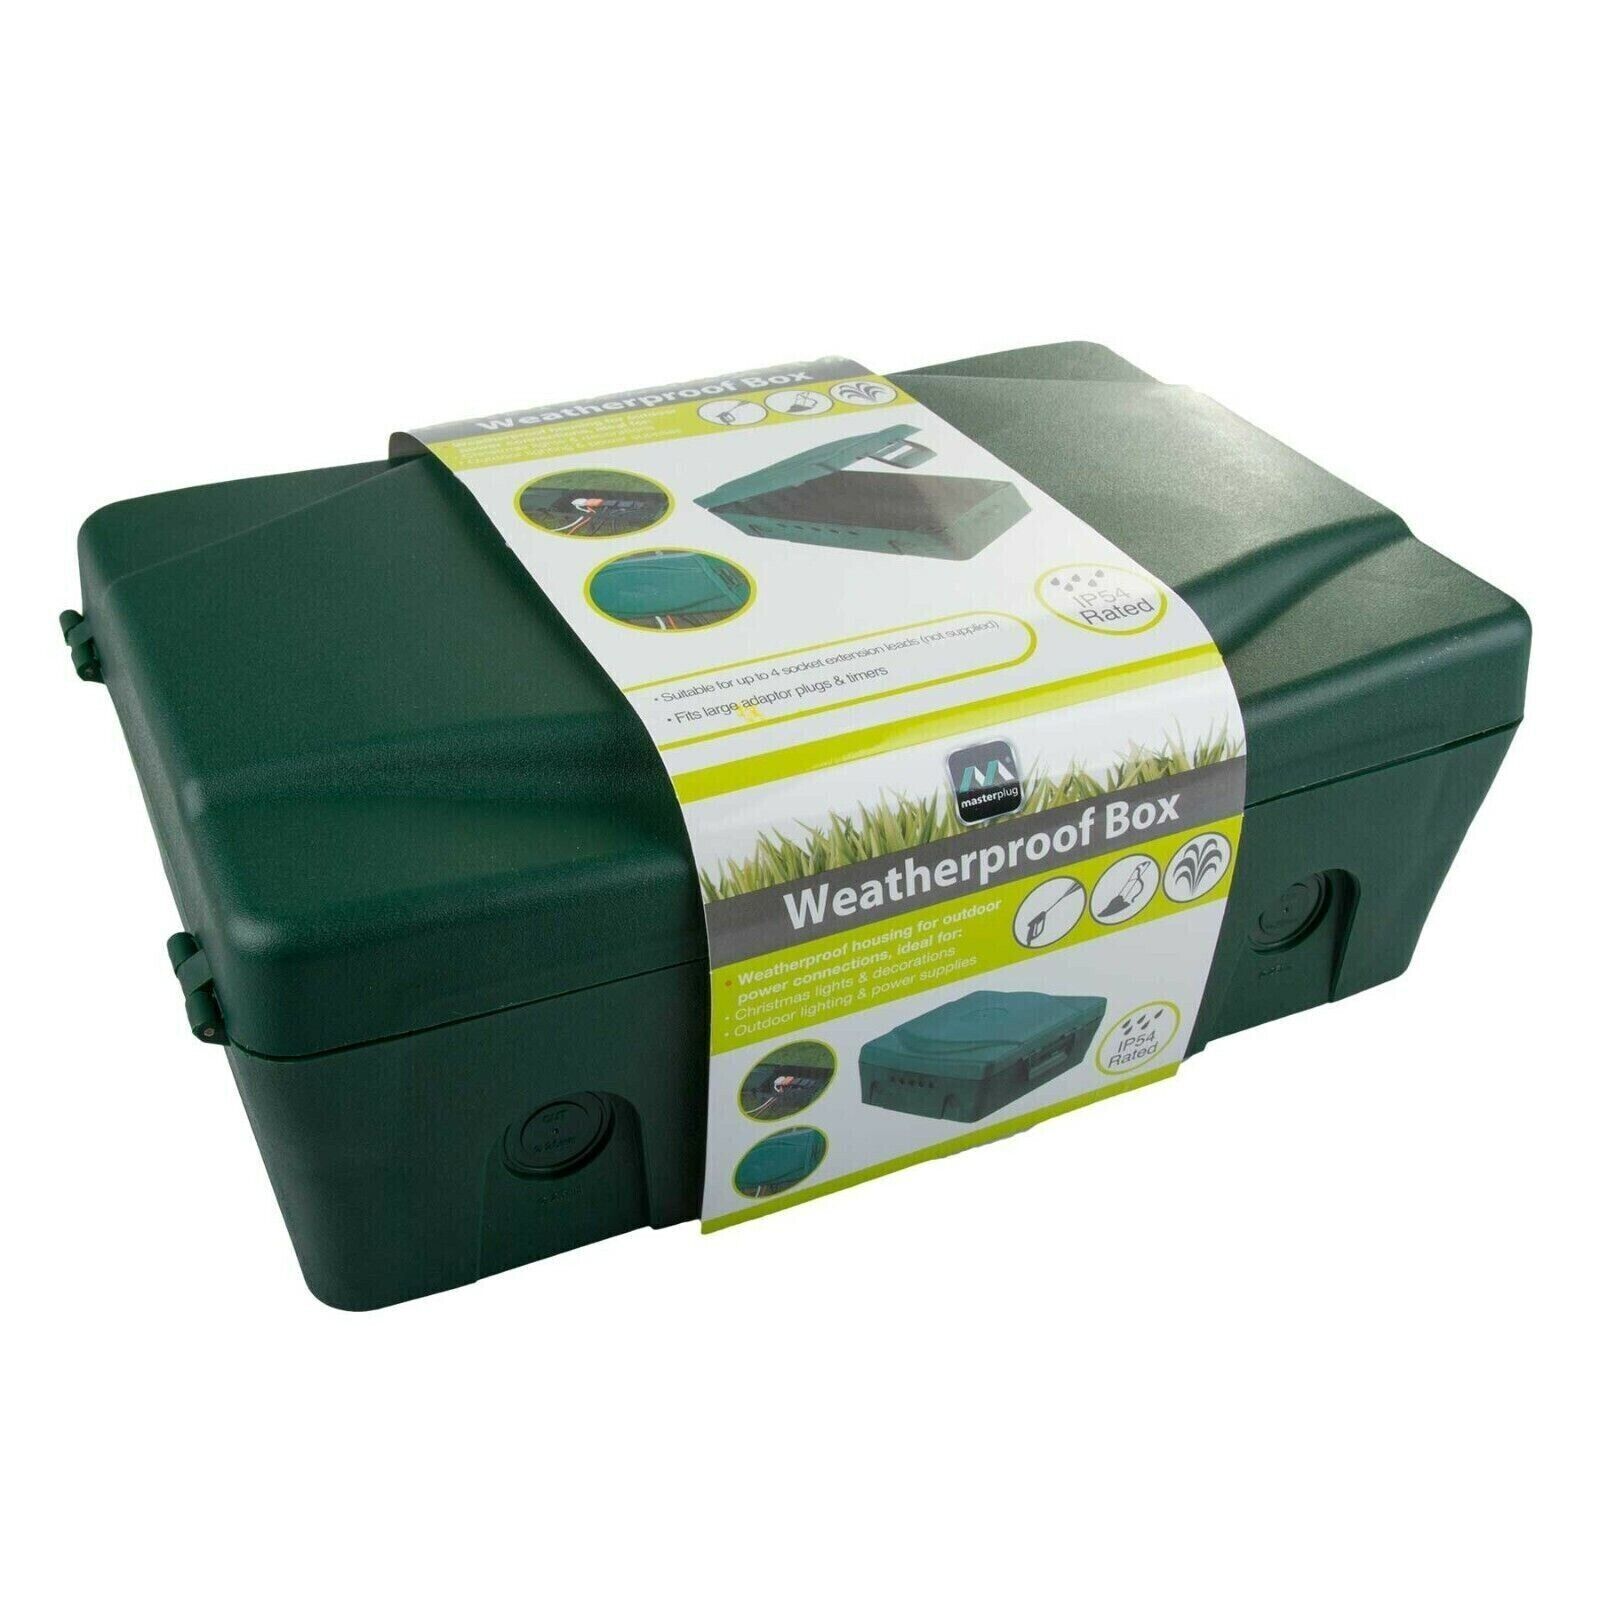 Masterplug IP54 Outdoor Weatherproof Enclosure Box -Green (WBXG)-0758